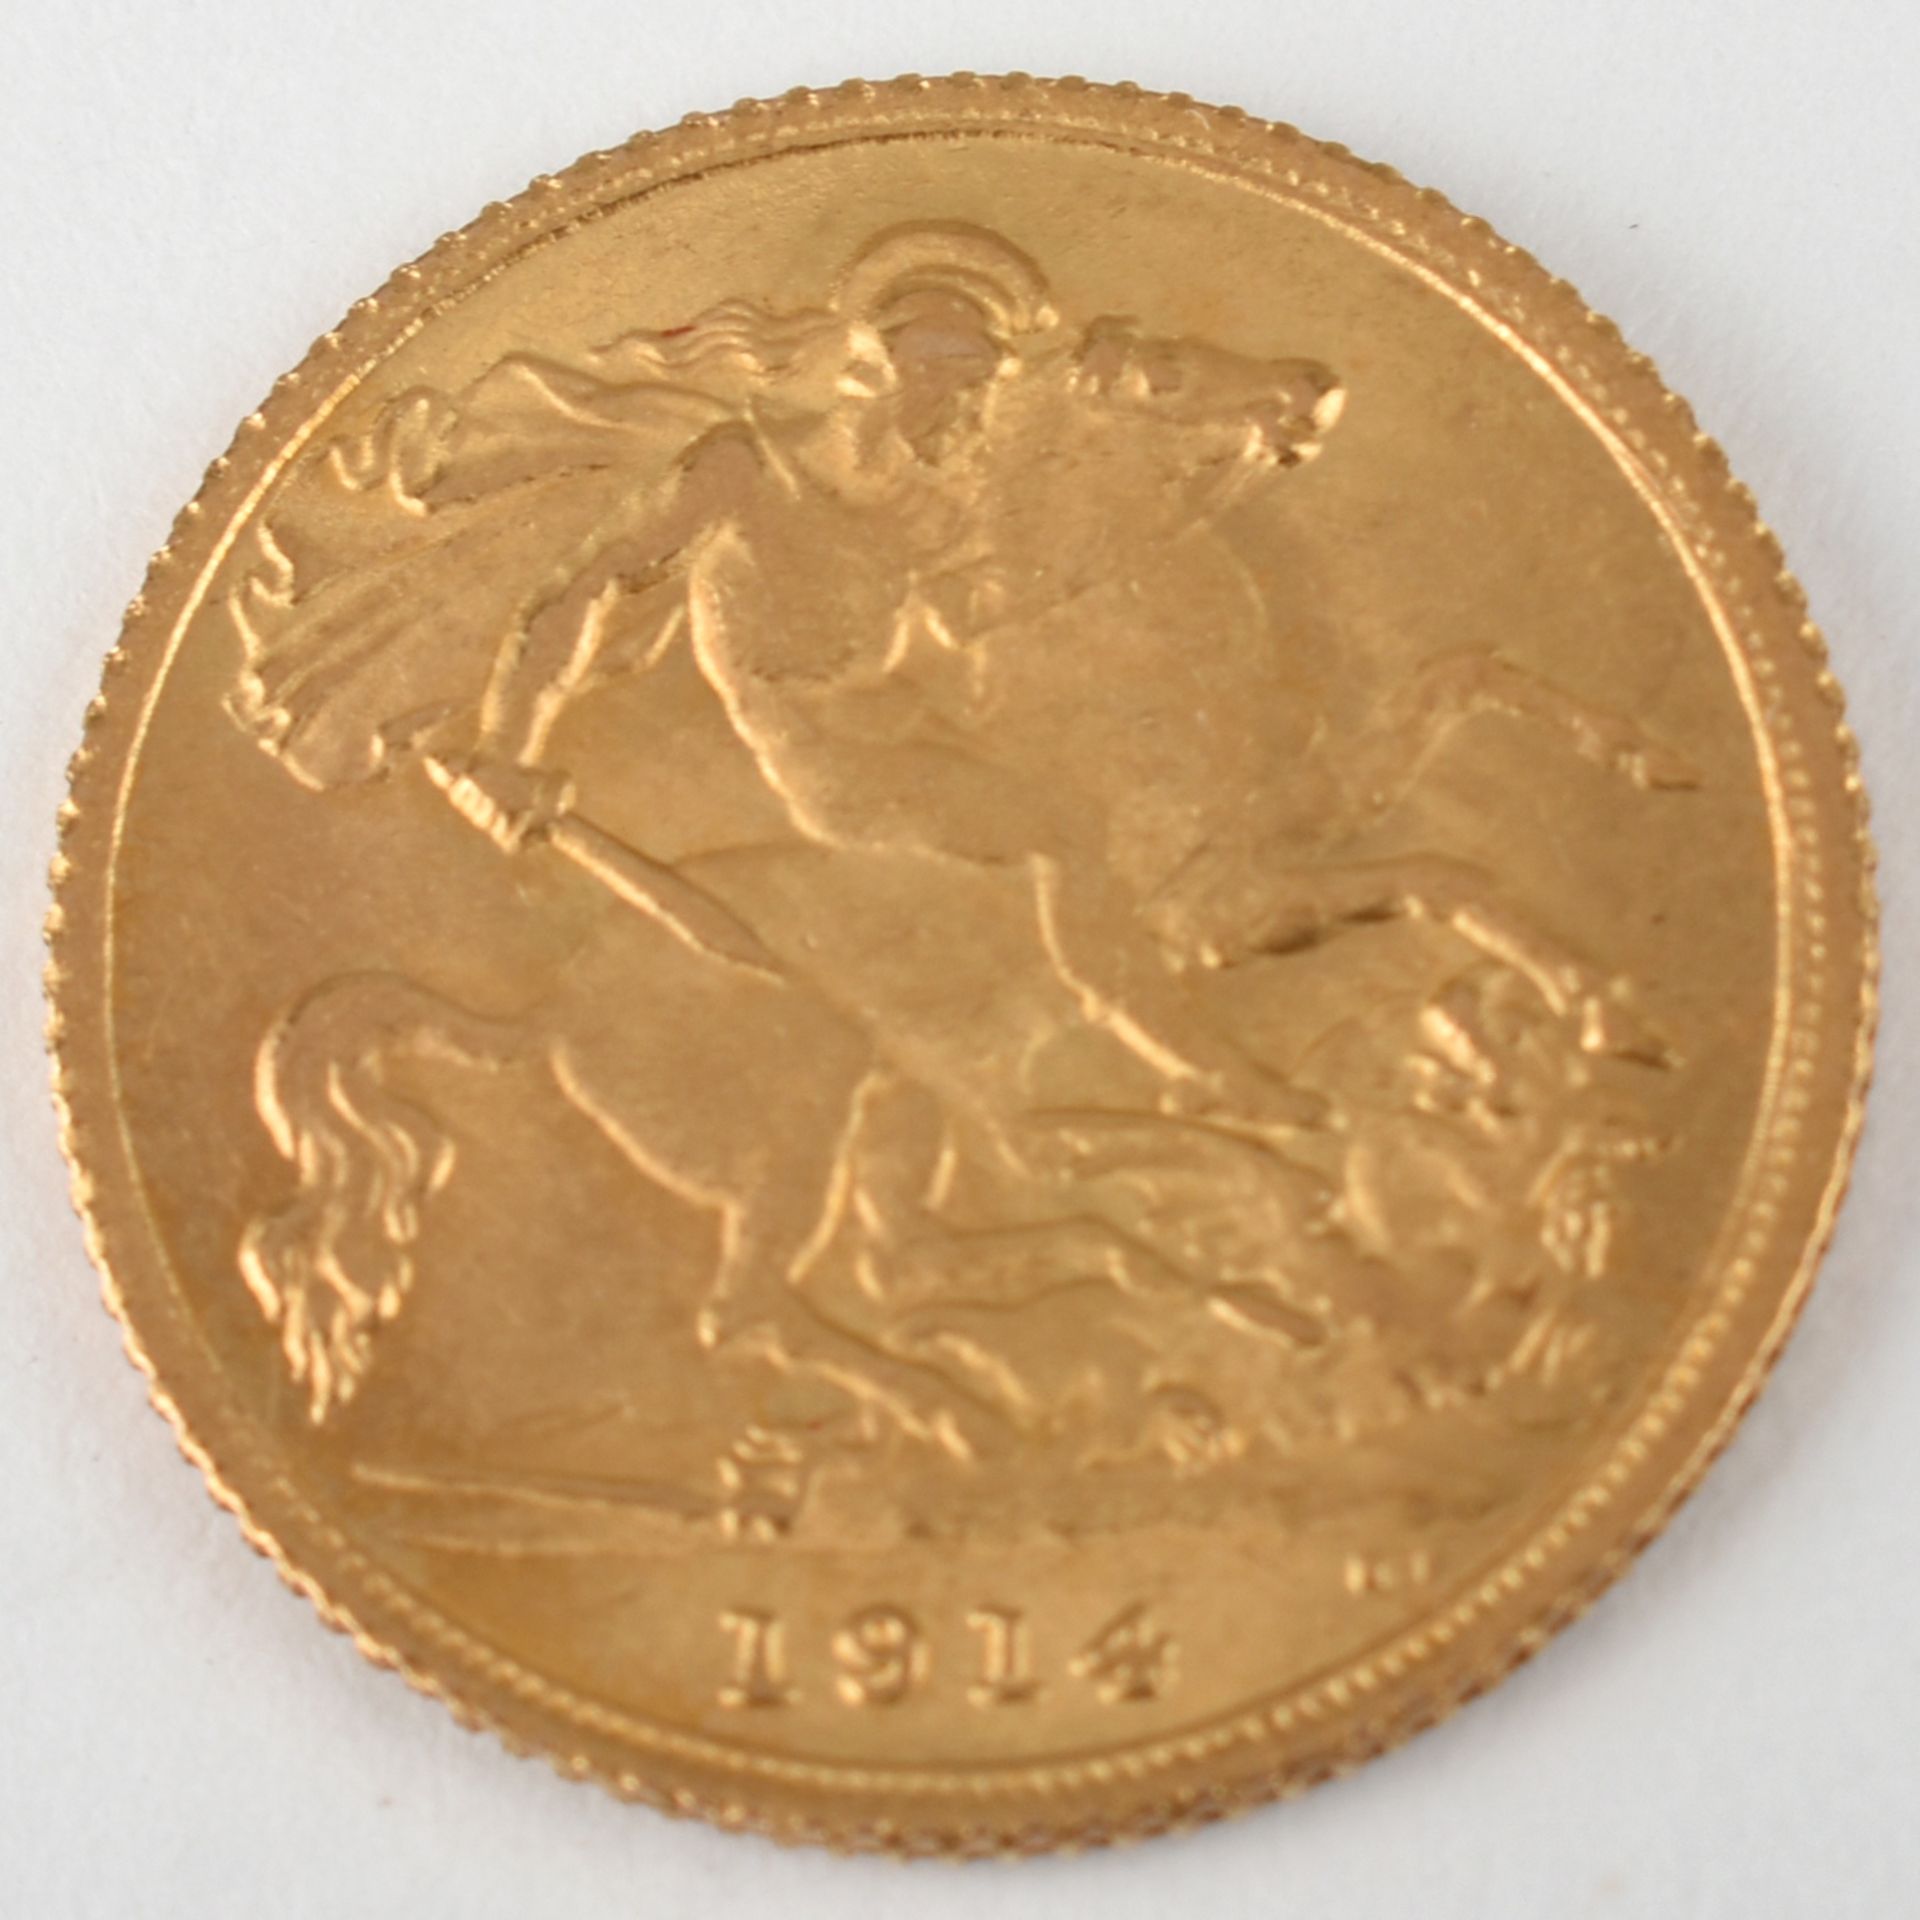 Goldmünze Großbritannien 1914 1/2 Sovereign in Gold, 916/1000, 3,994 g, D ca. 19,3 mm, av. König - Bild 3 aus 3